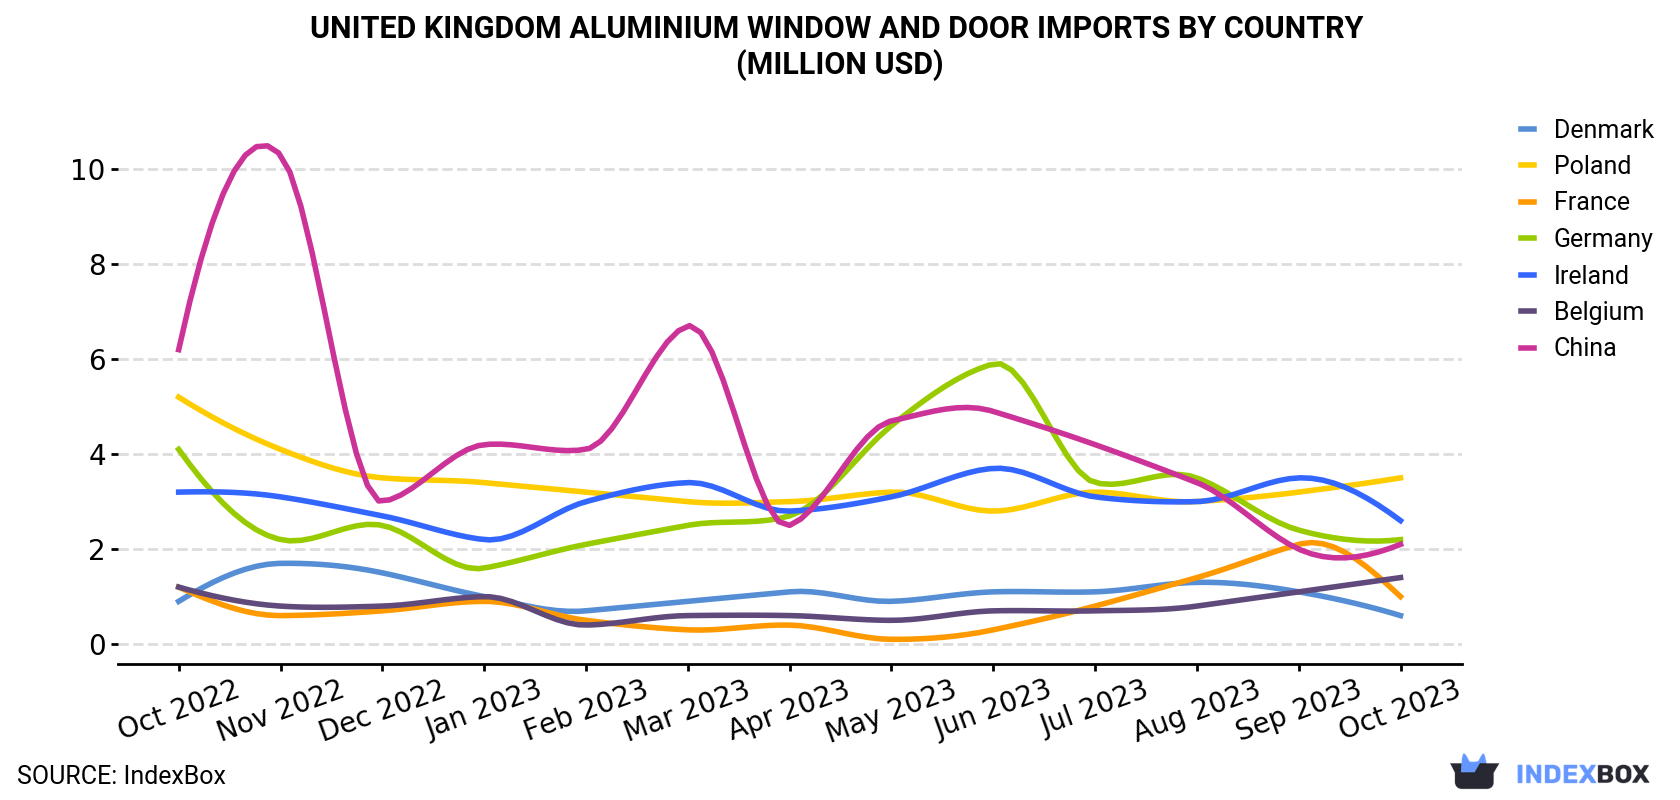 United Kingdom Aluminium Window And Door Imports By Country (Million USD)